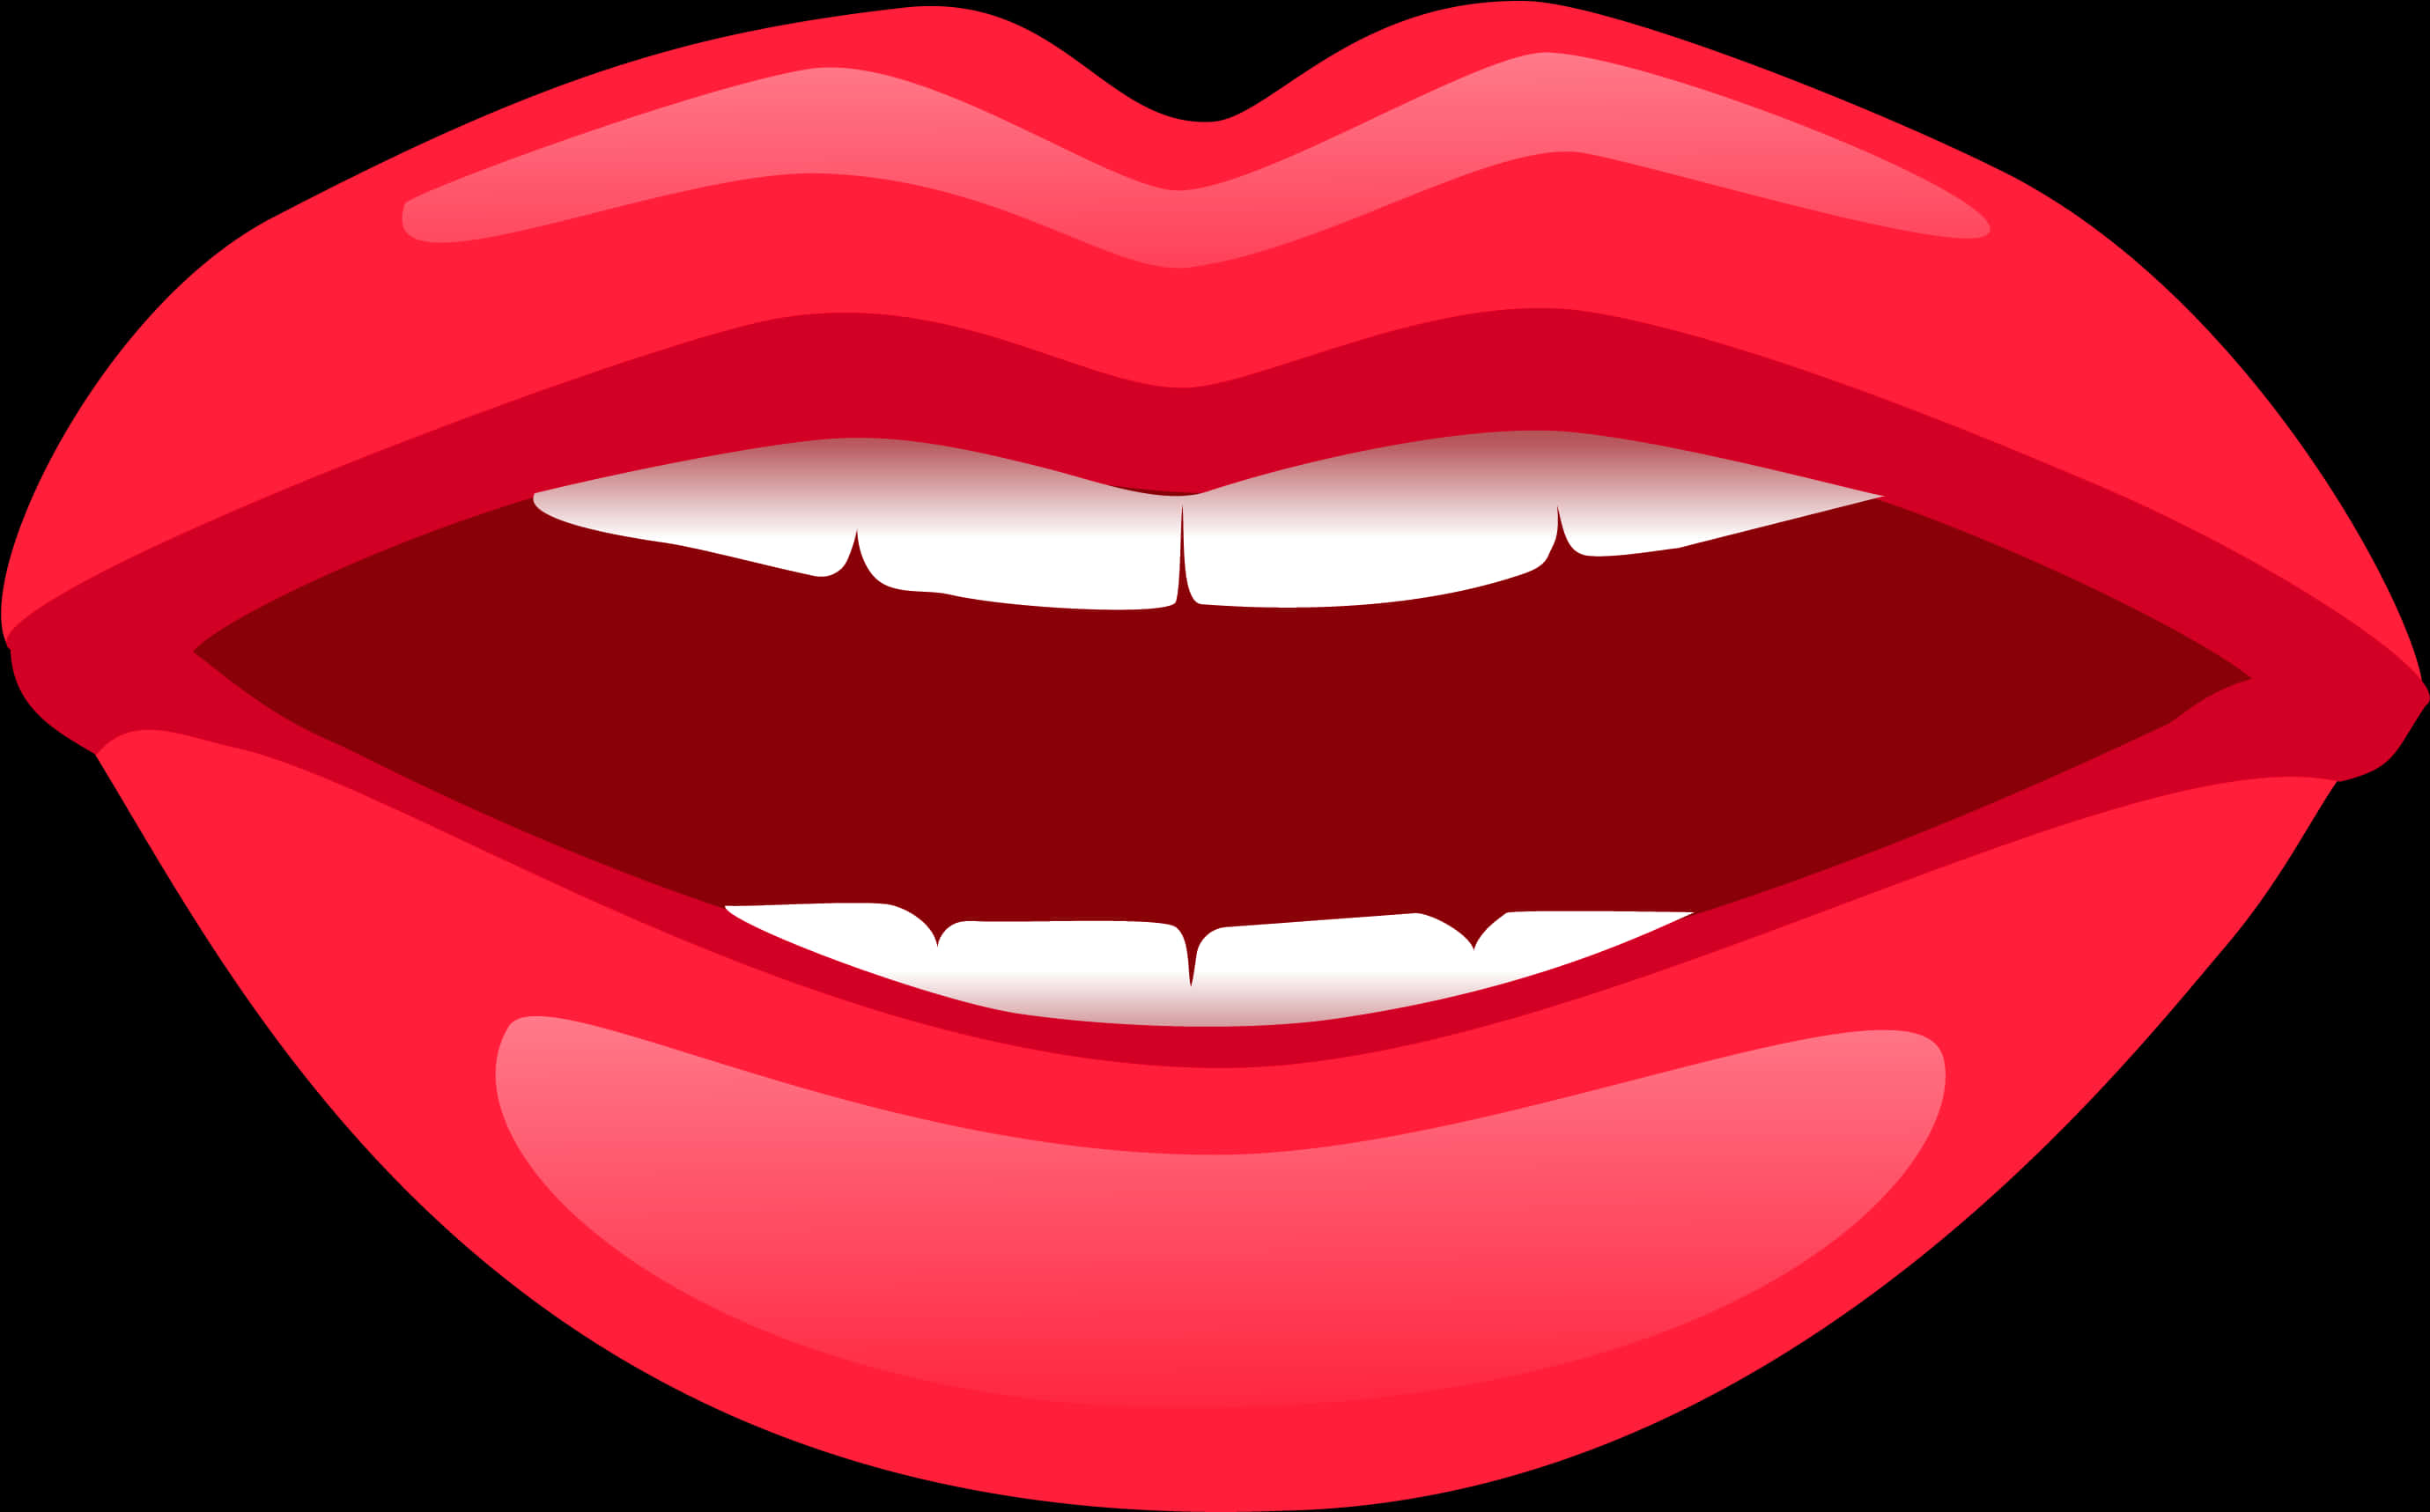 Red Lips Vector Illustration SVG